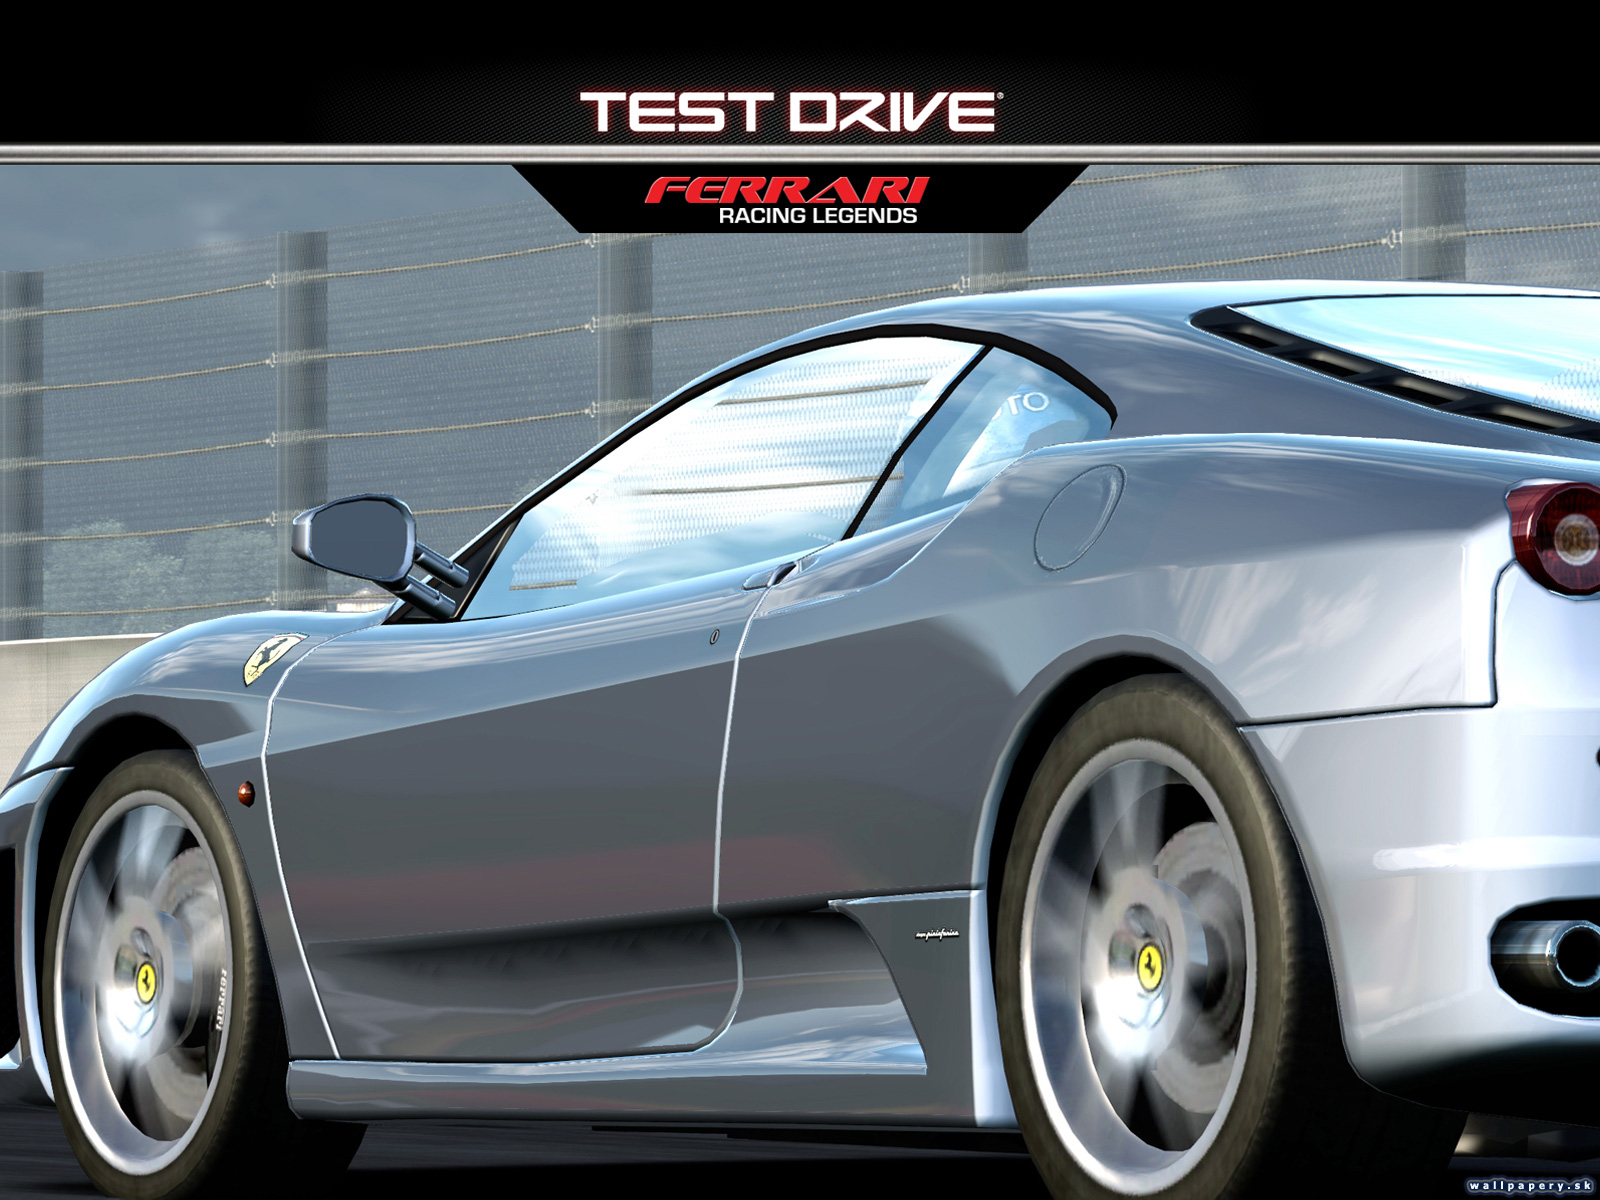 Test Drive: Ferrari Racing Legends - wallpaper 2